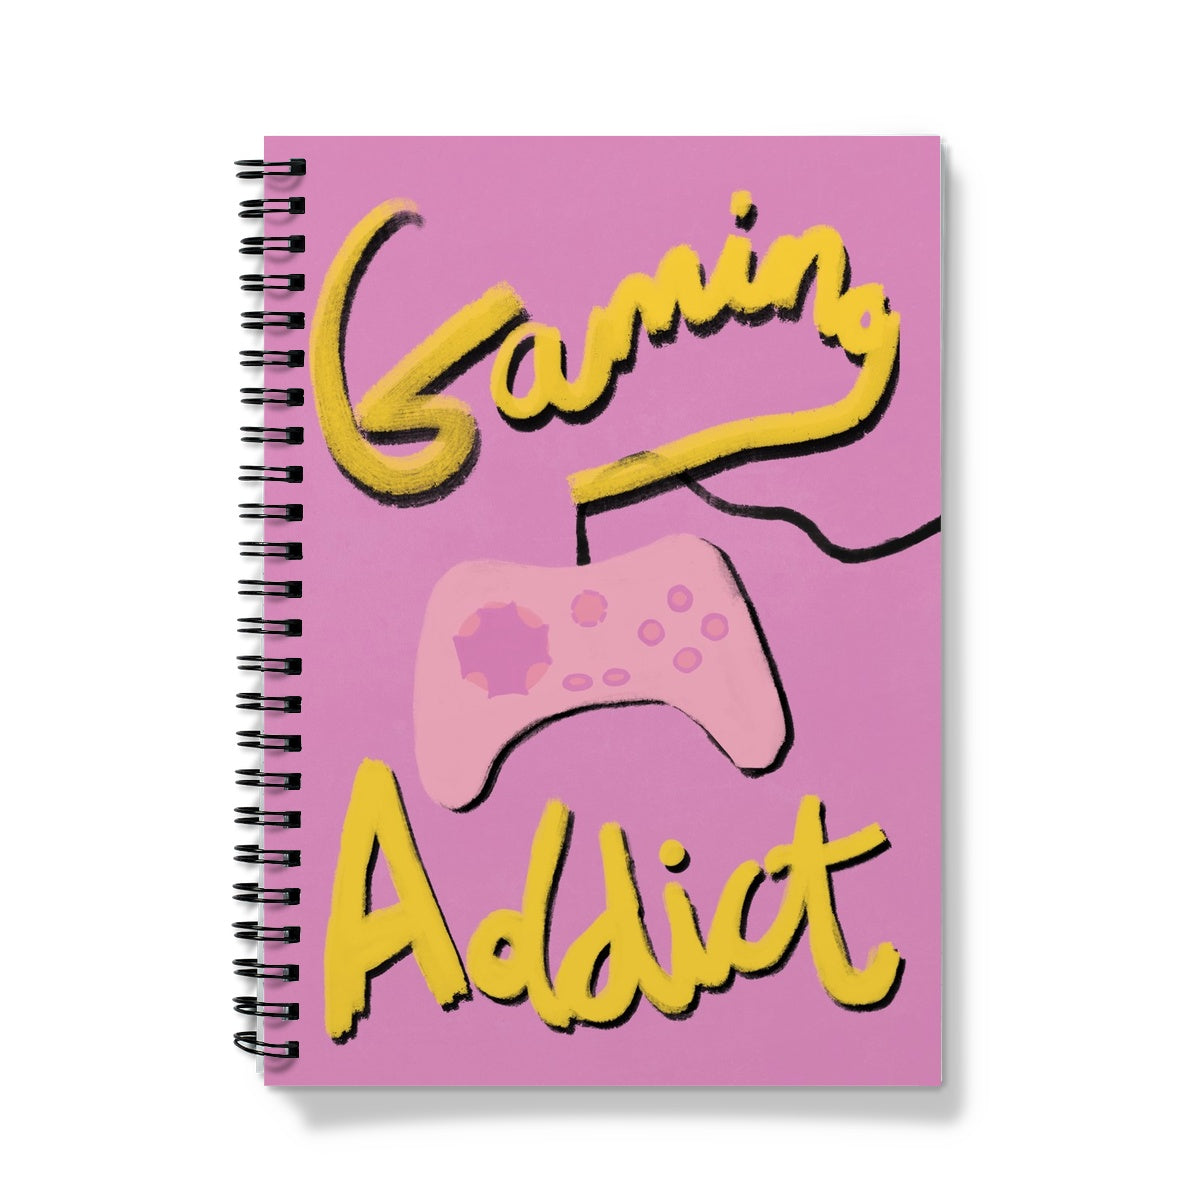 Gaming Addict Print - Pink, Yellow Notebook